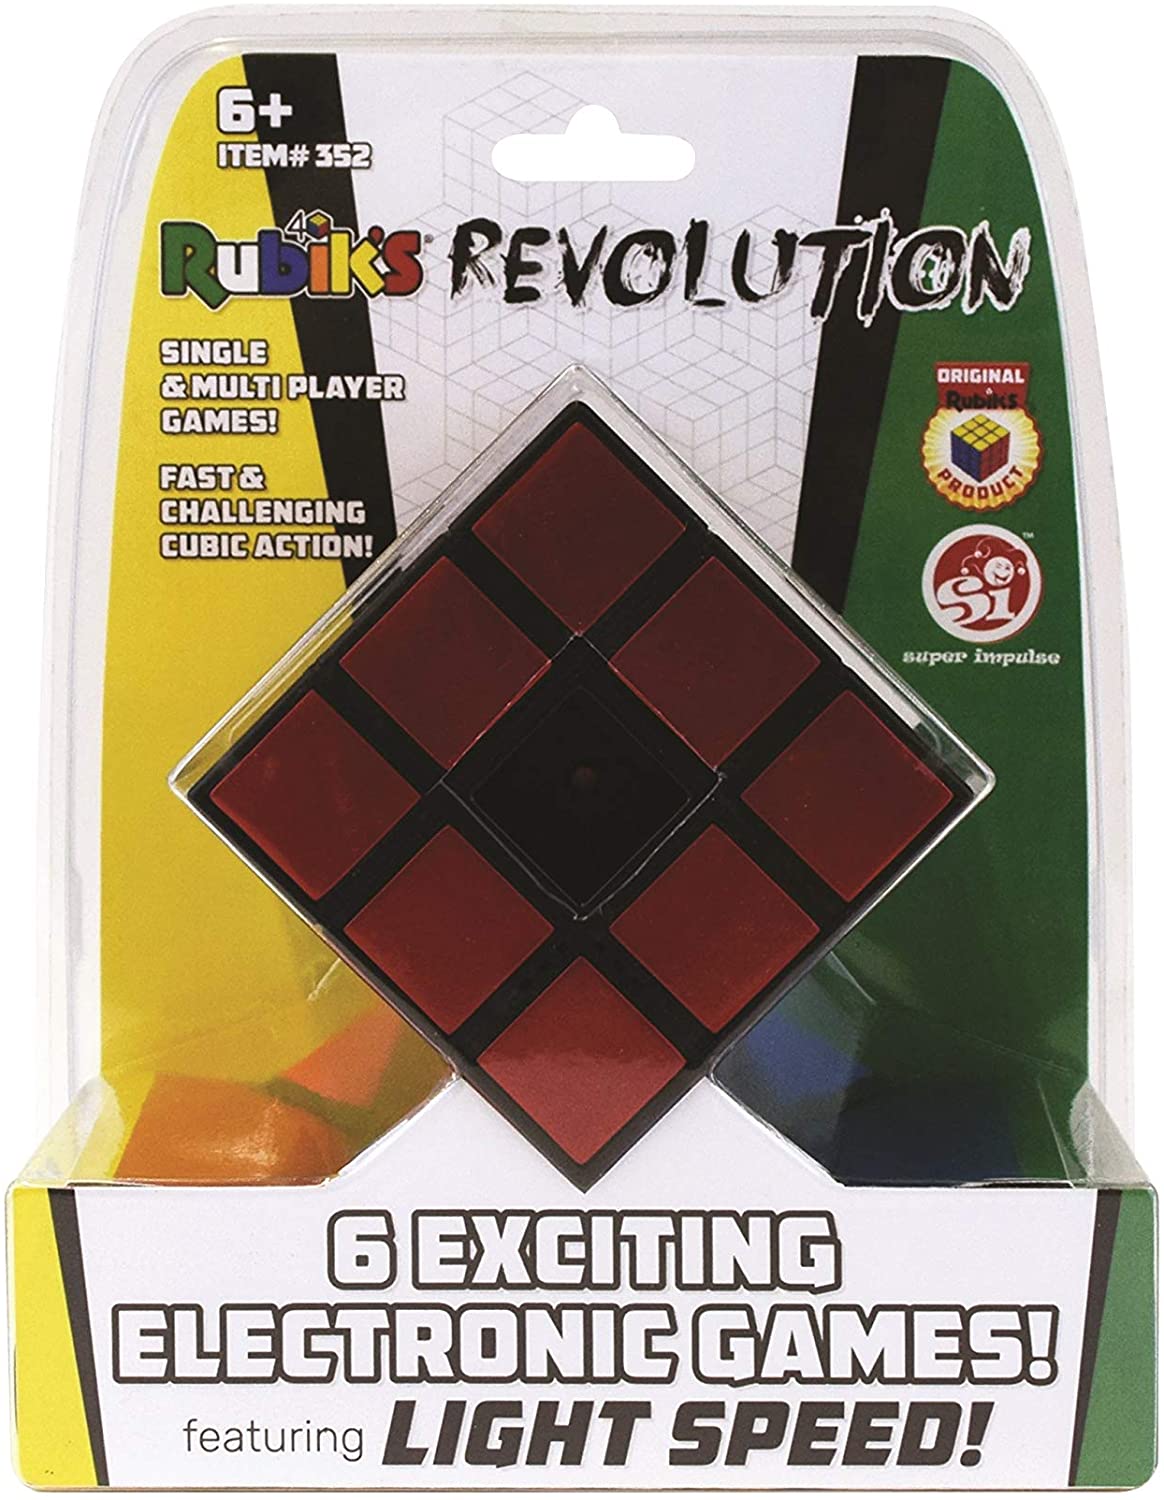 Super Impulse Rubik's Revolution-hotRAGS.com